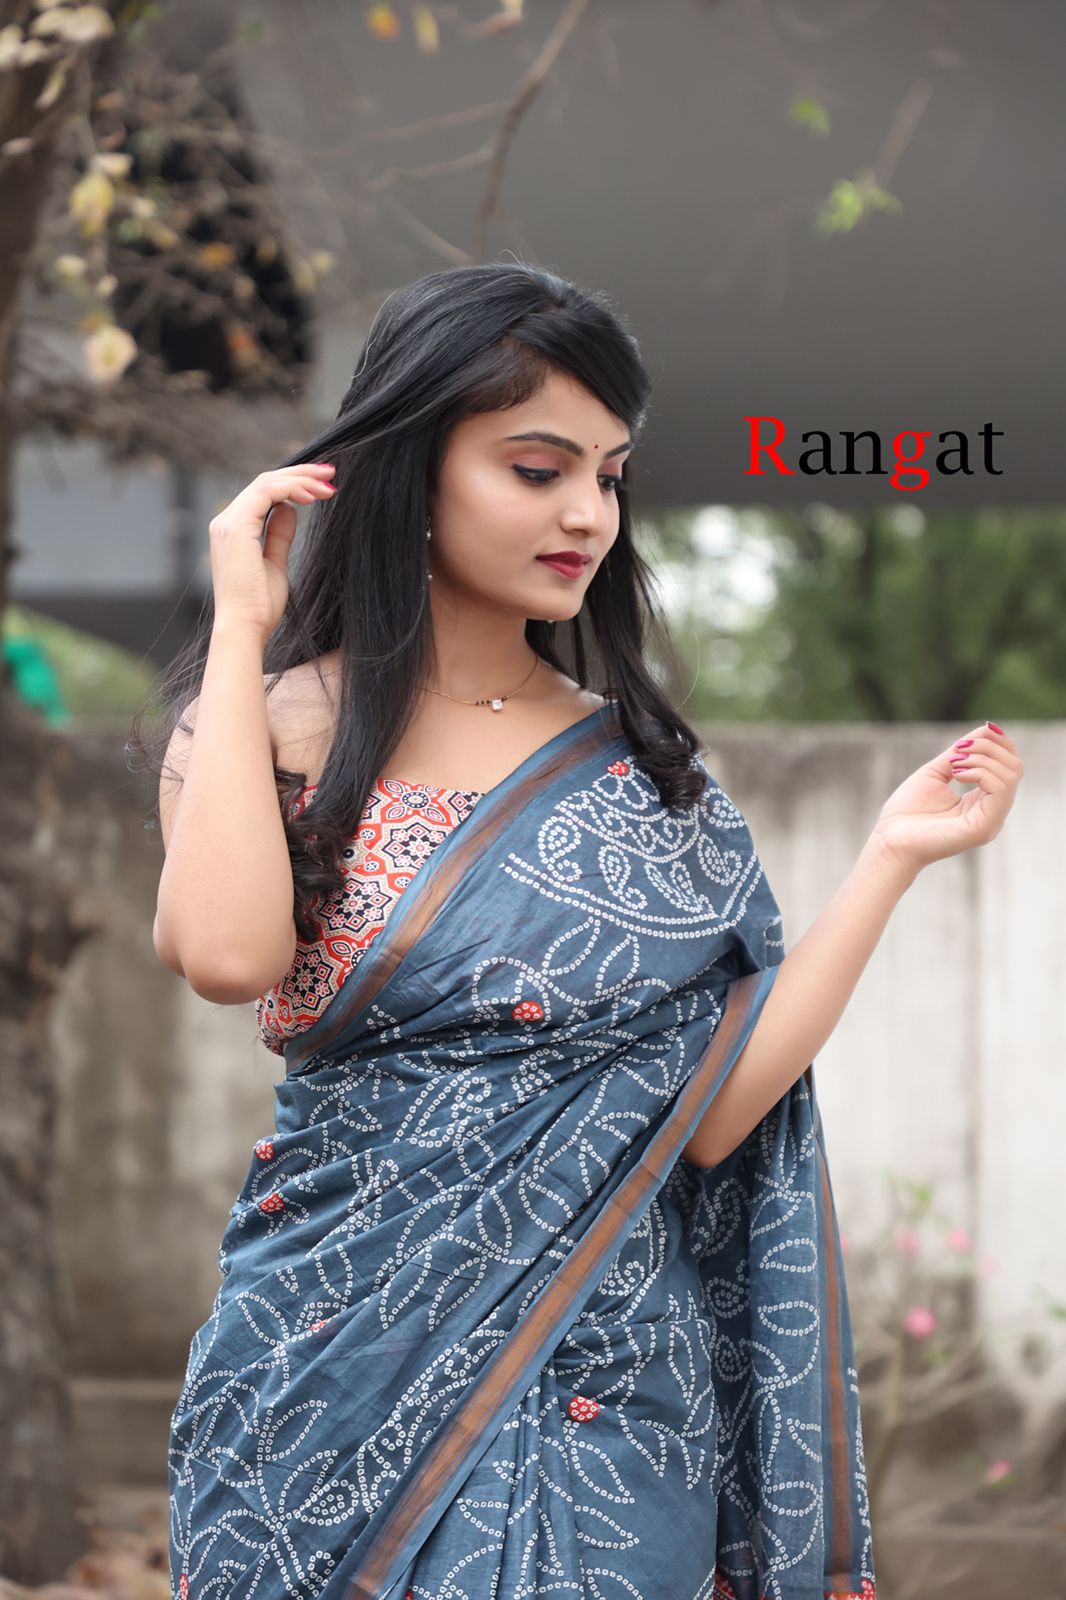 Handicraft Women's  Bandhani Print Pure soft Cotton Saree With Zari Border and Blouse Piece Rangat Grey